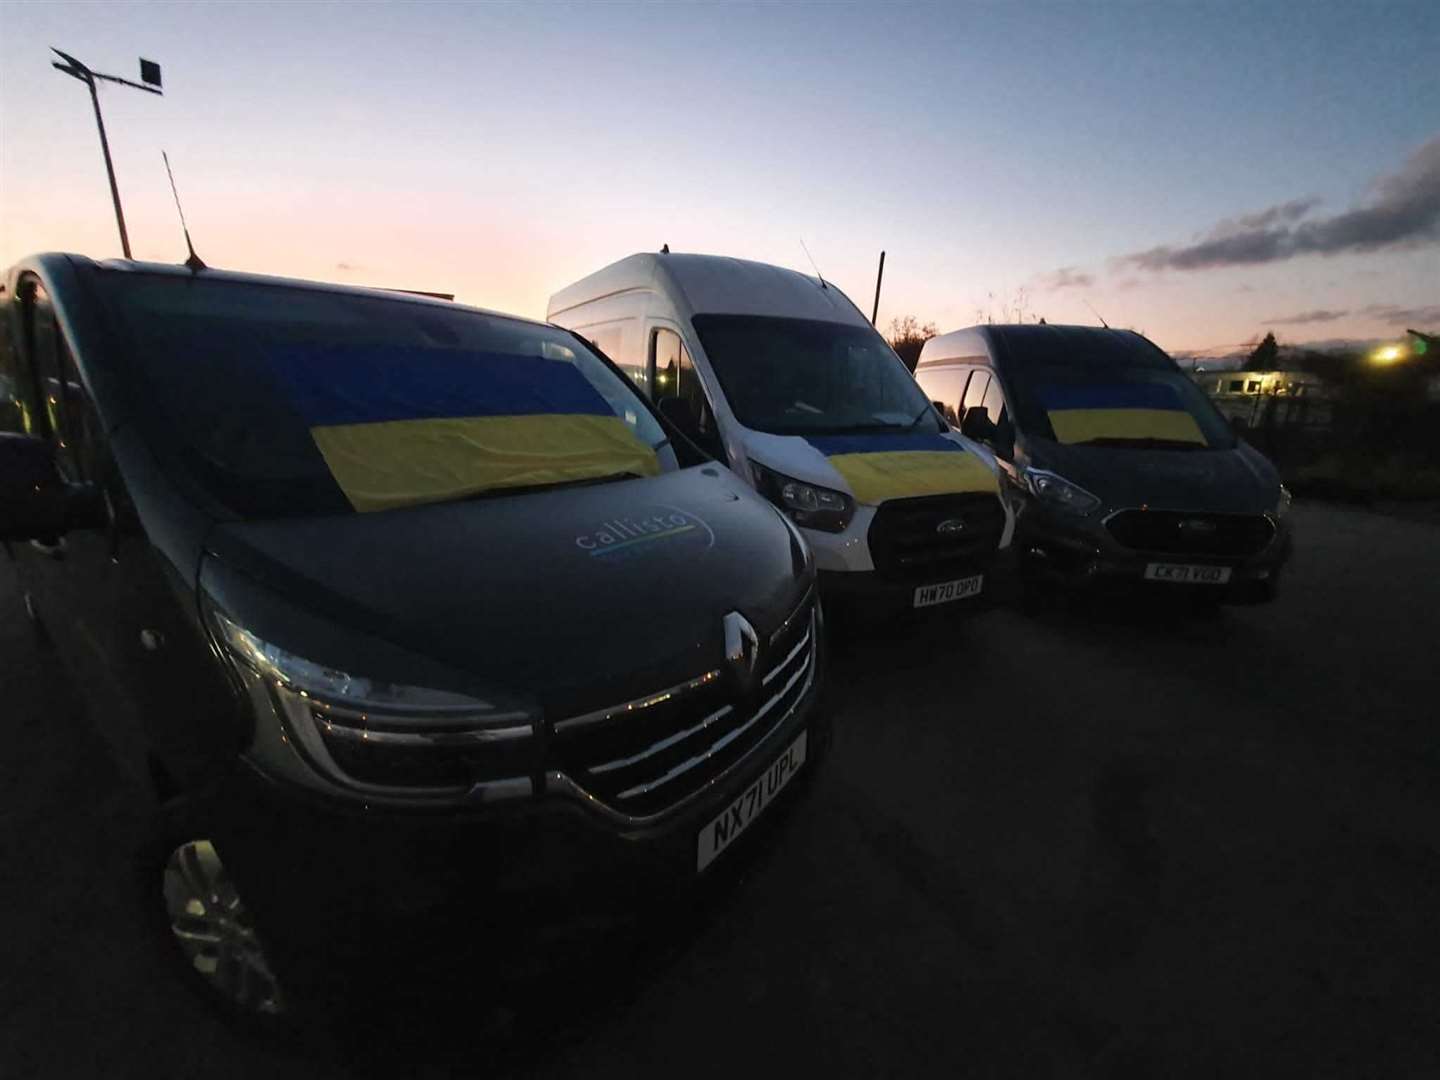 The vans sporting the Ukrainian flag. Picture: Vilius Domarkas